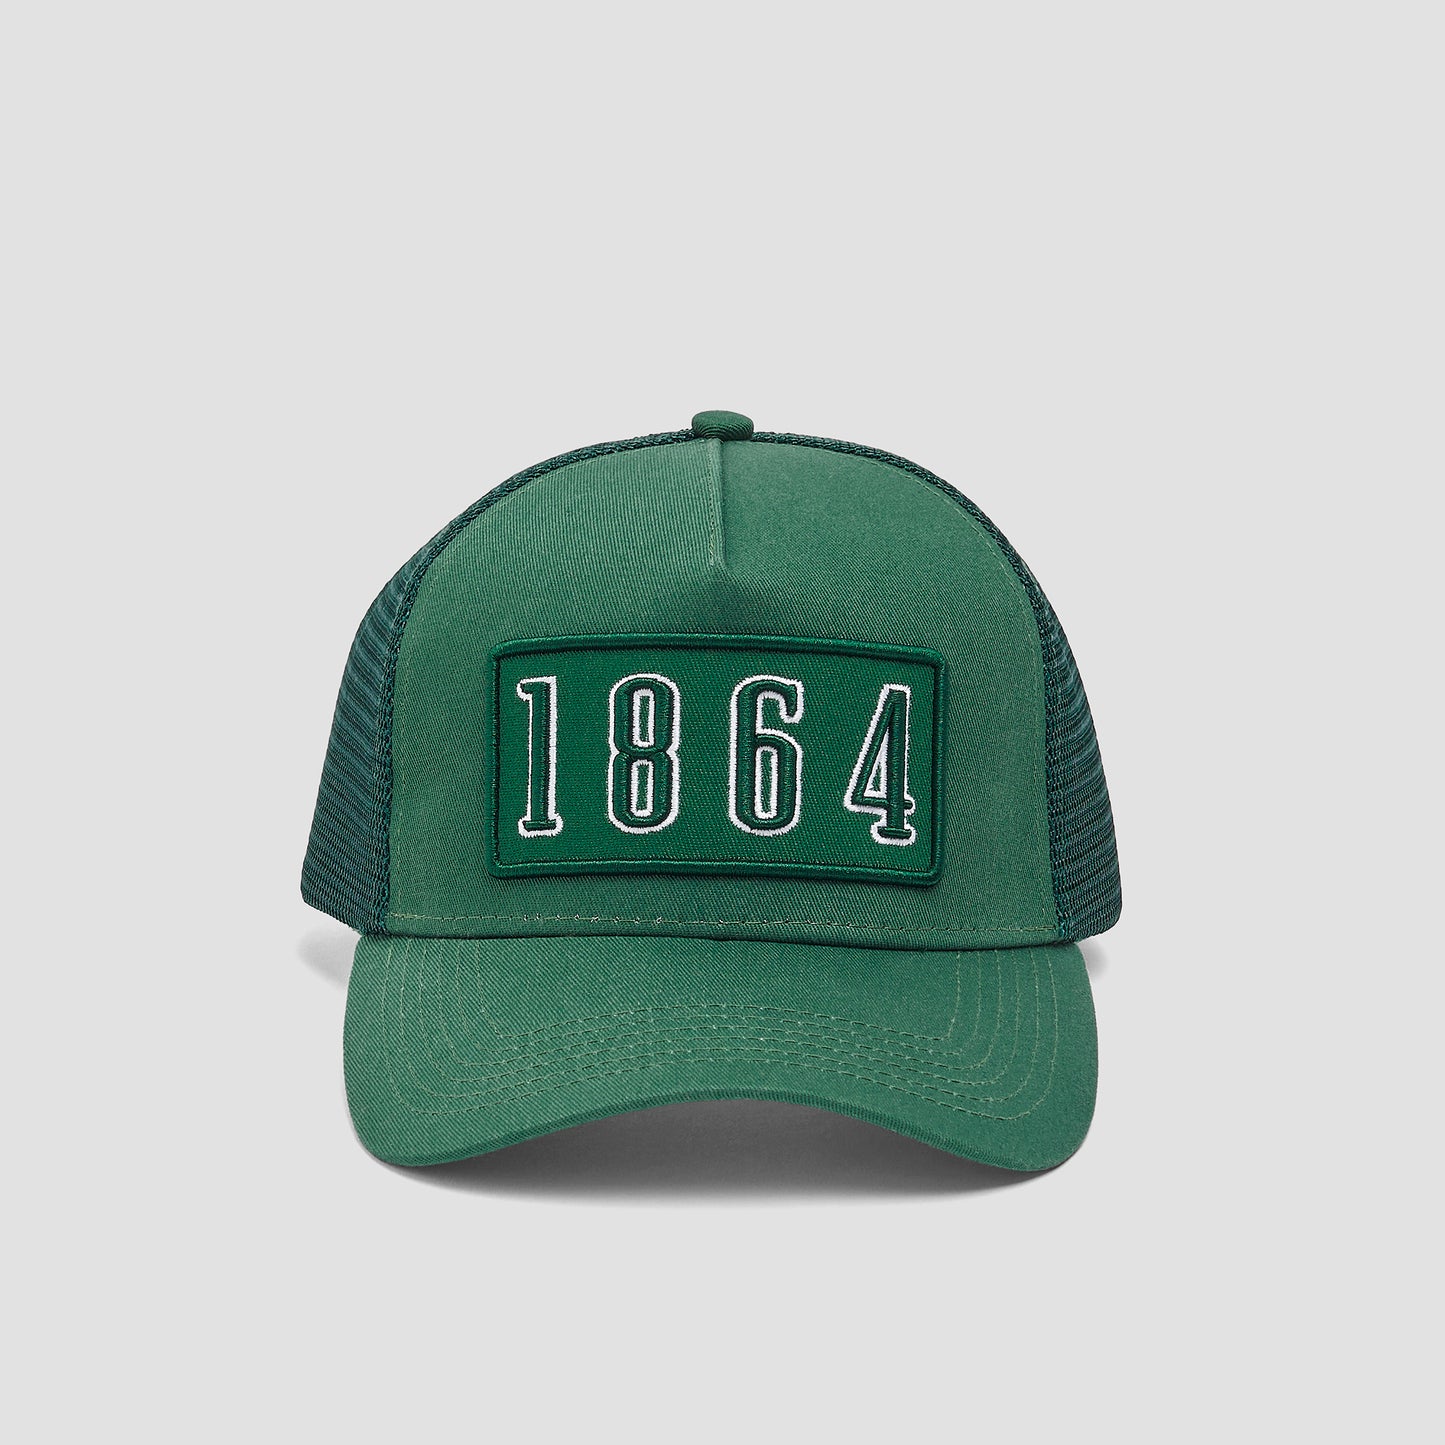 1864 Cap - Bottle Green